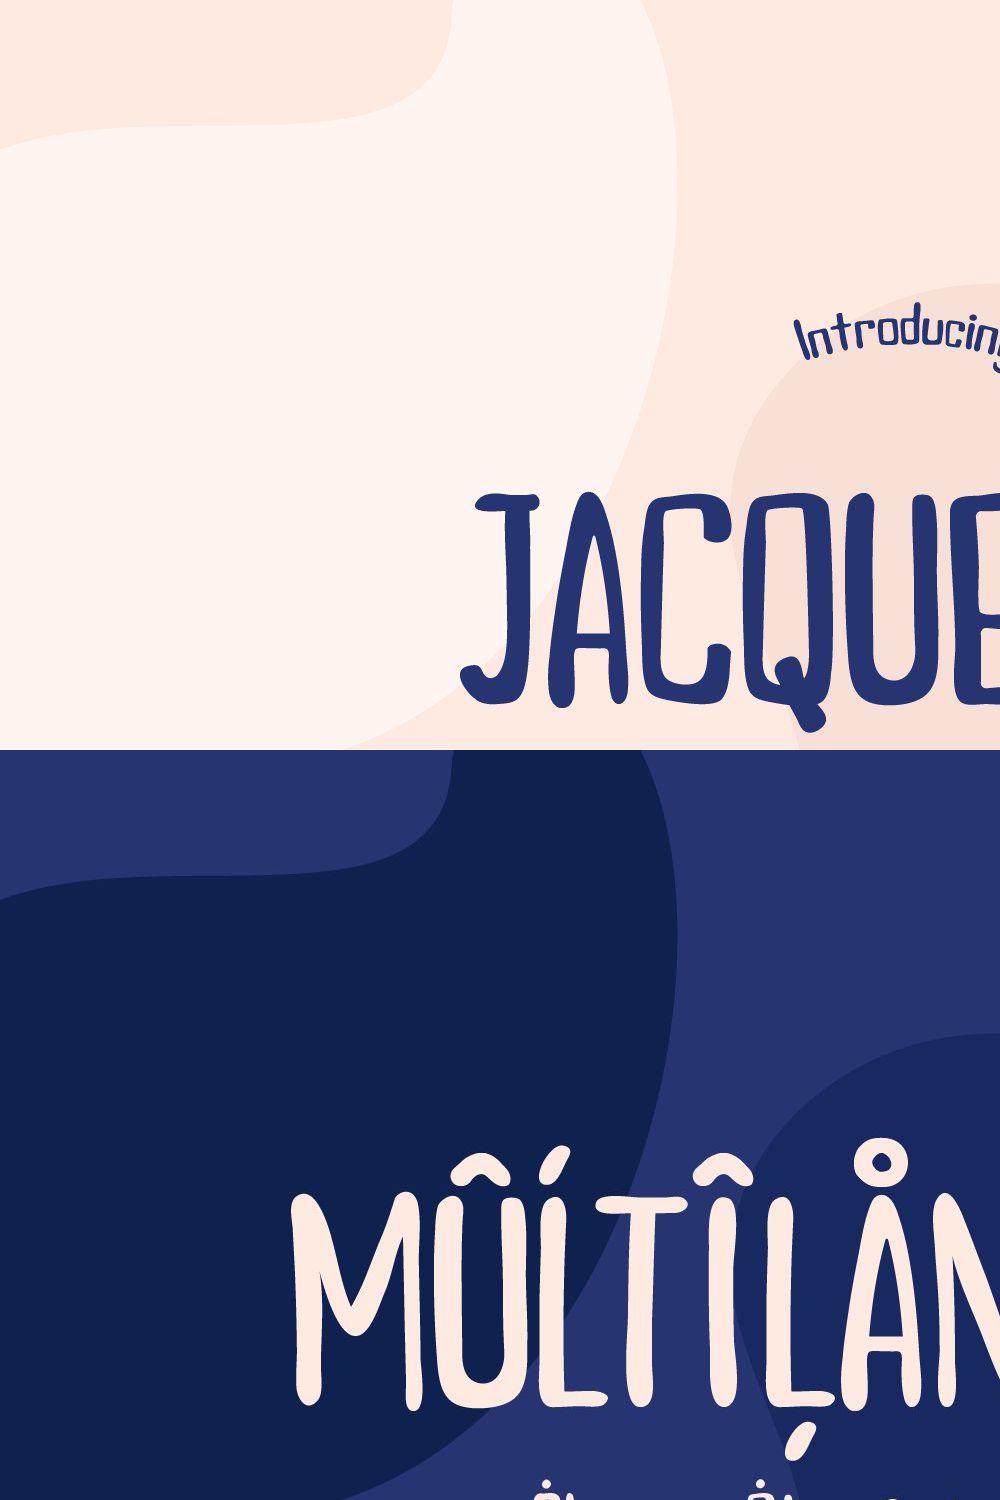 Jacqueline Font (Cyrillic & Latin) pinterest preview image.